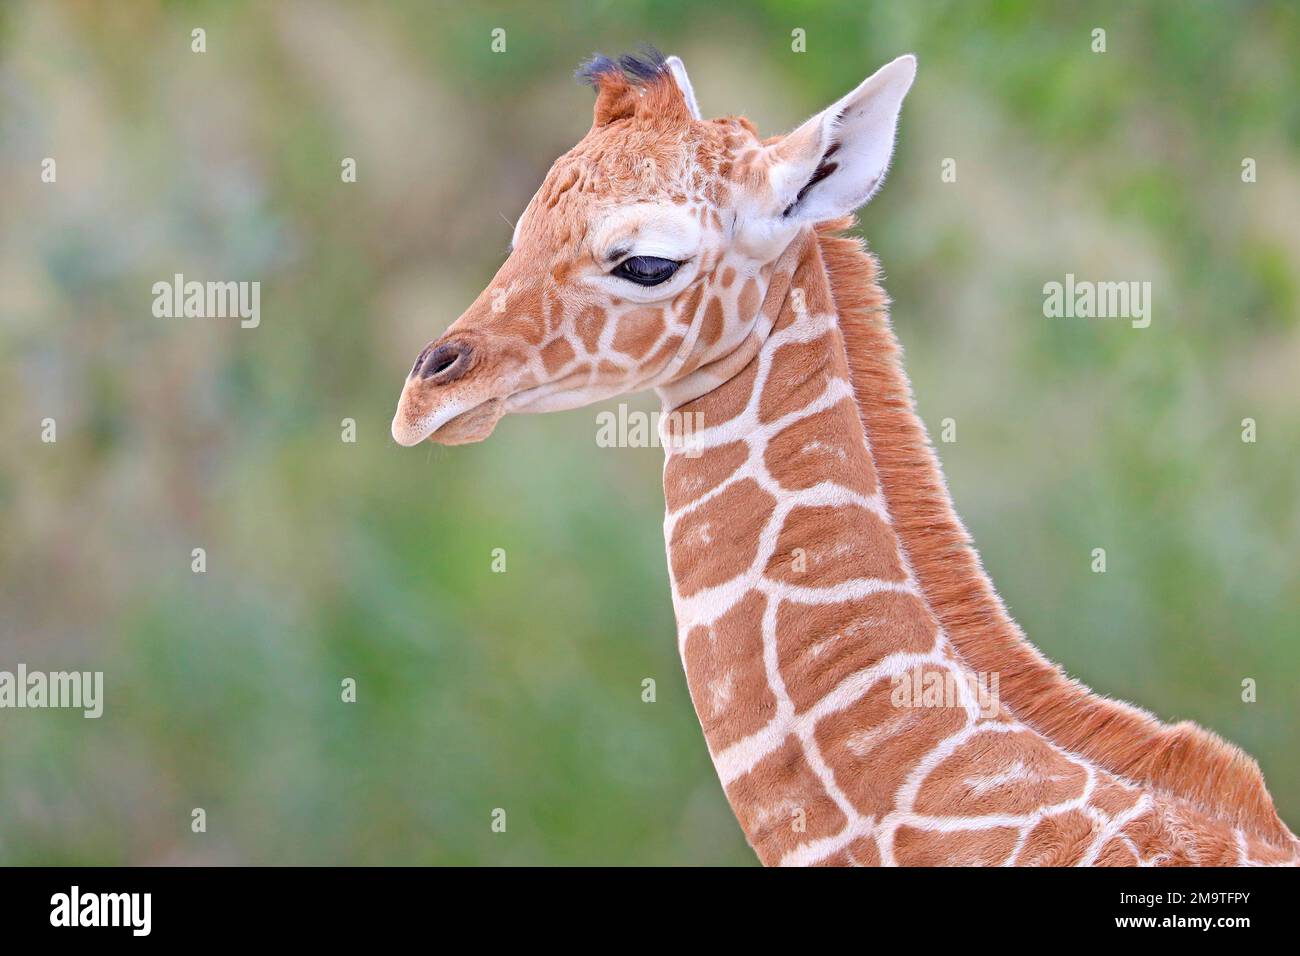 Baby Giraffe head close up Stock Photo